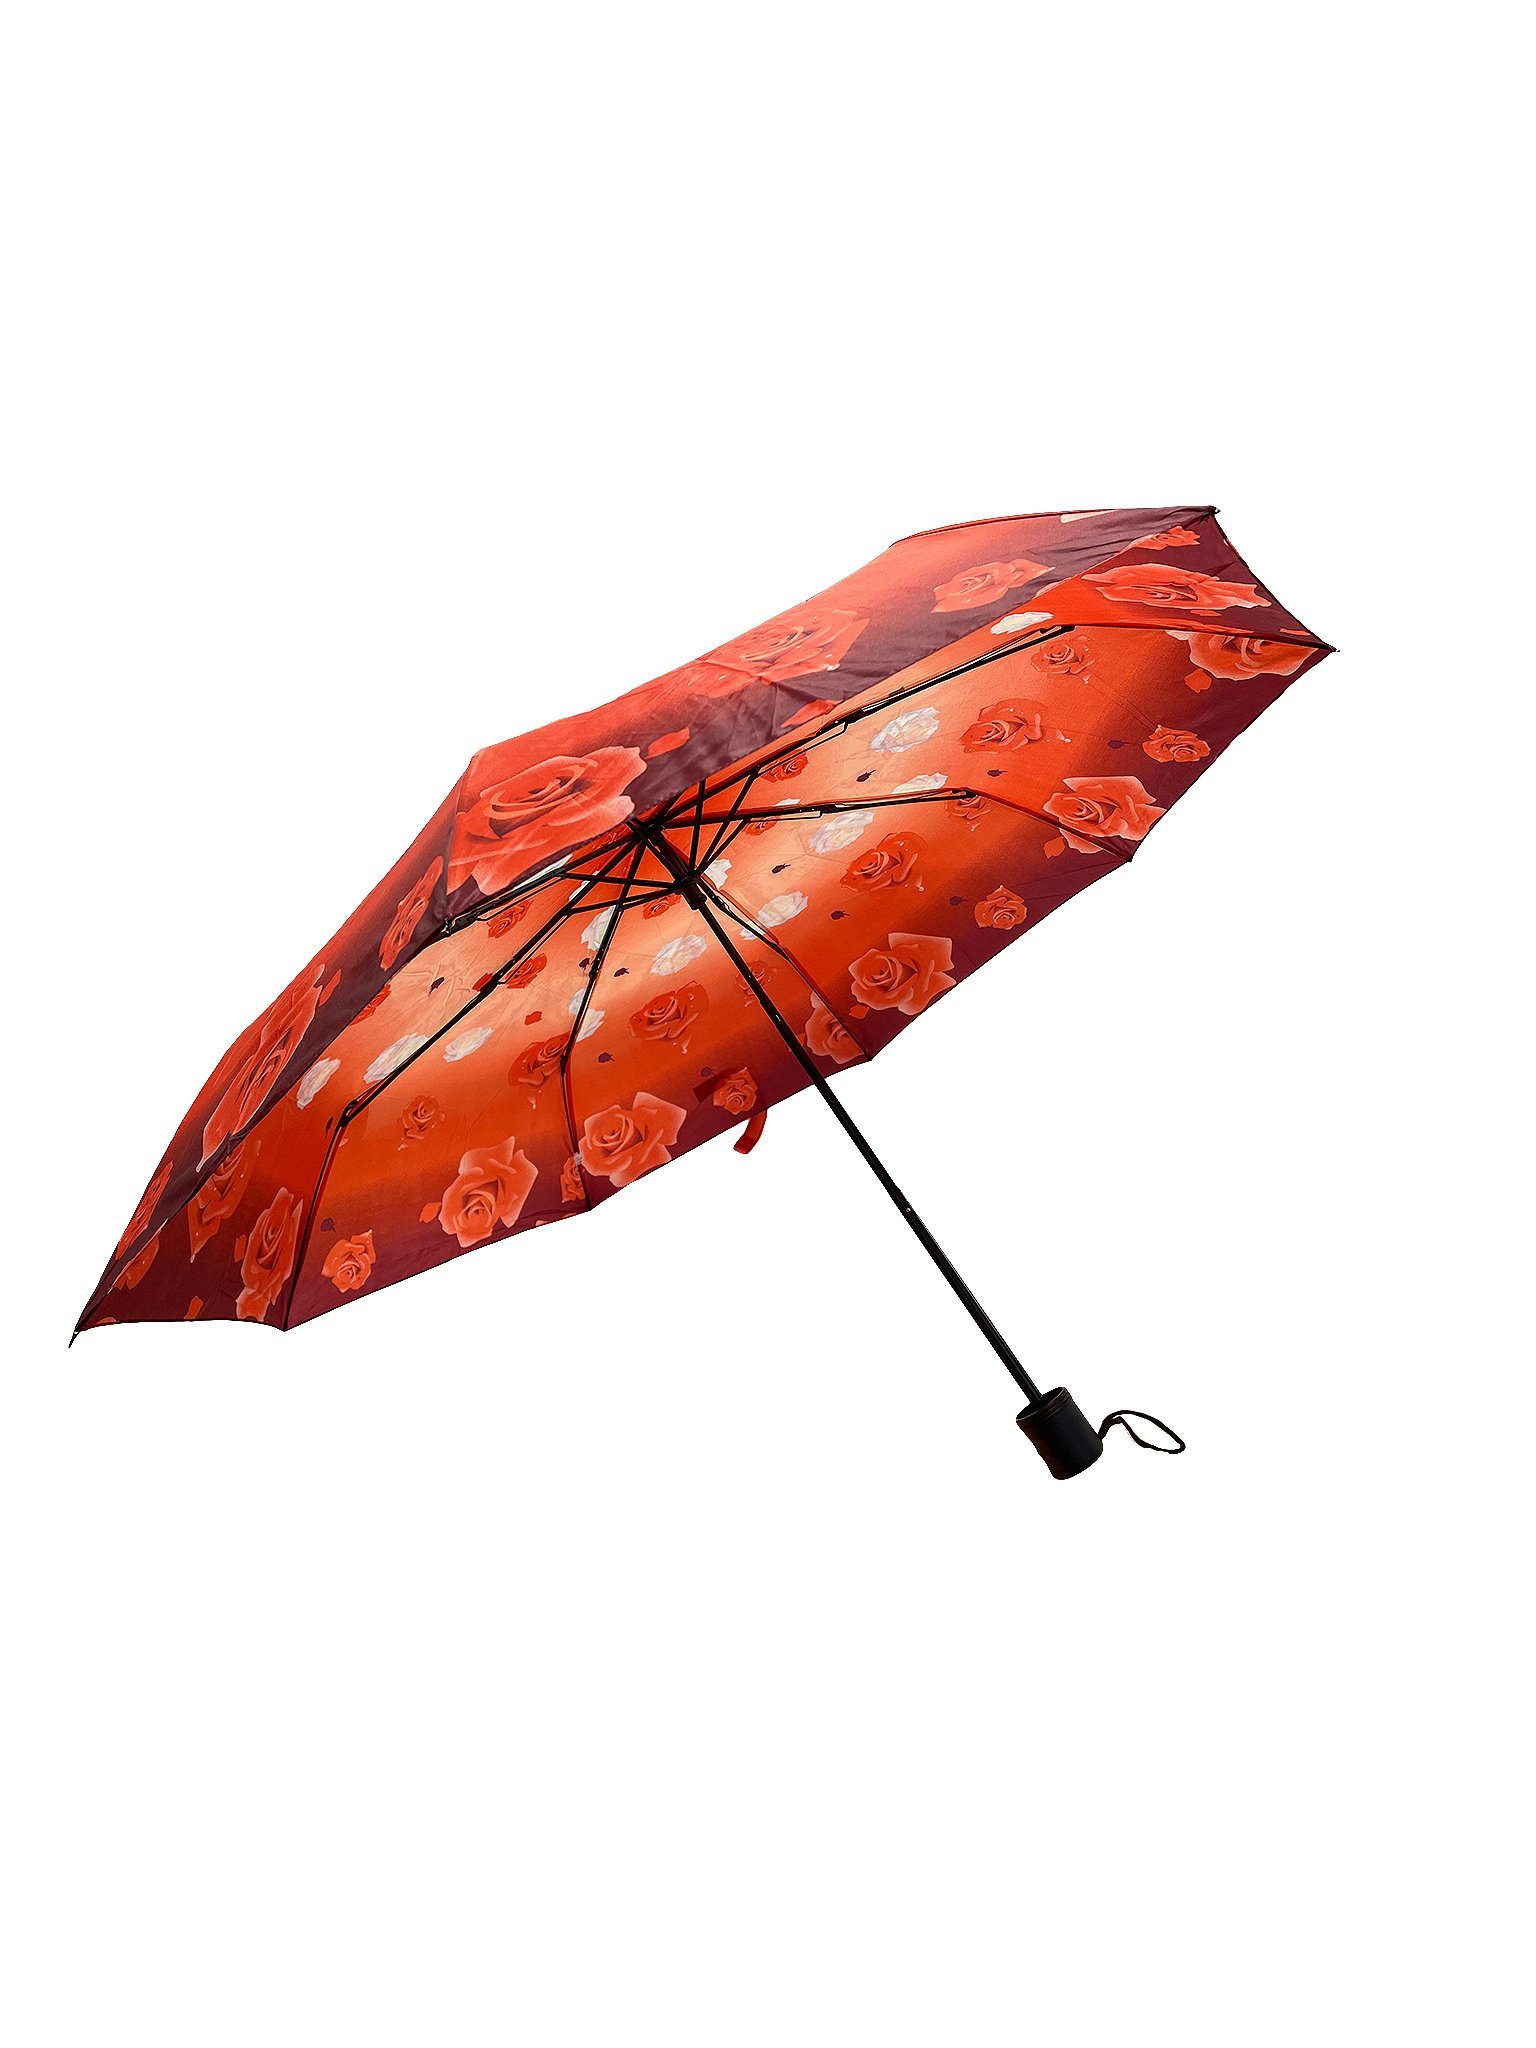 ANELY Taschenregenschirm Kleiner Regenschirm Paris Gemustert Taschenschirm, 6746 in Rot